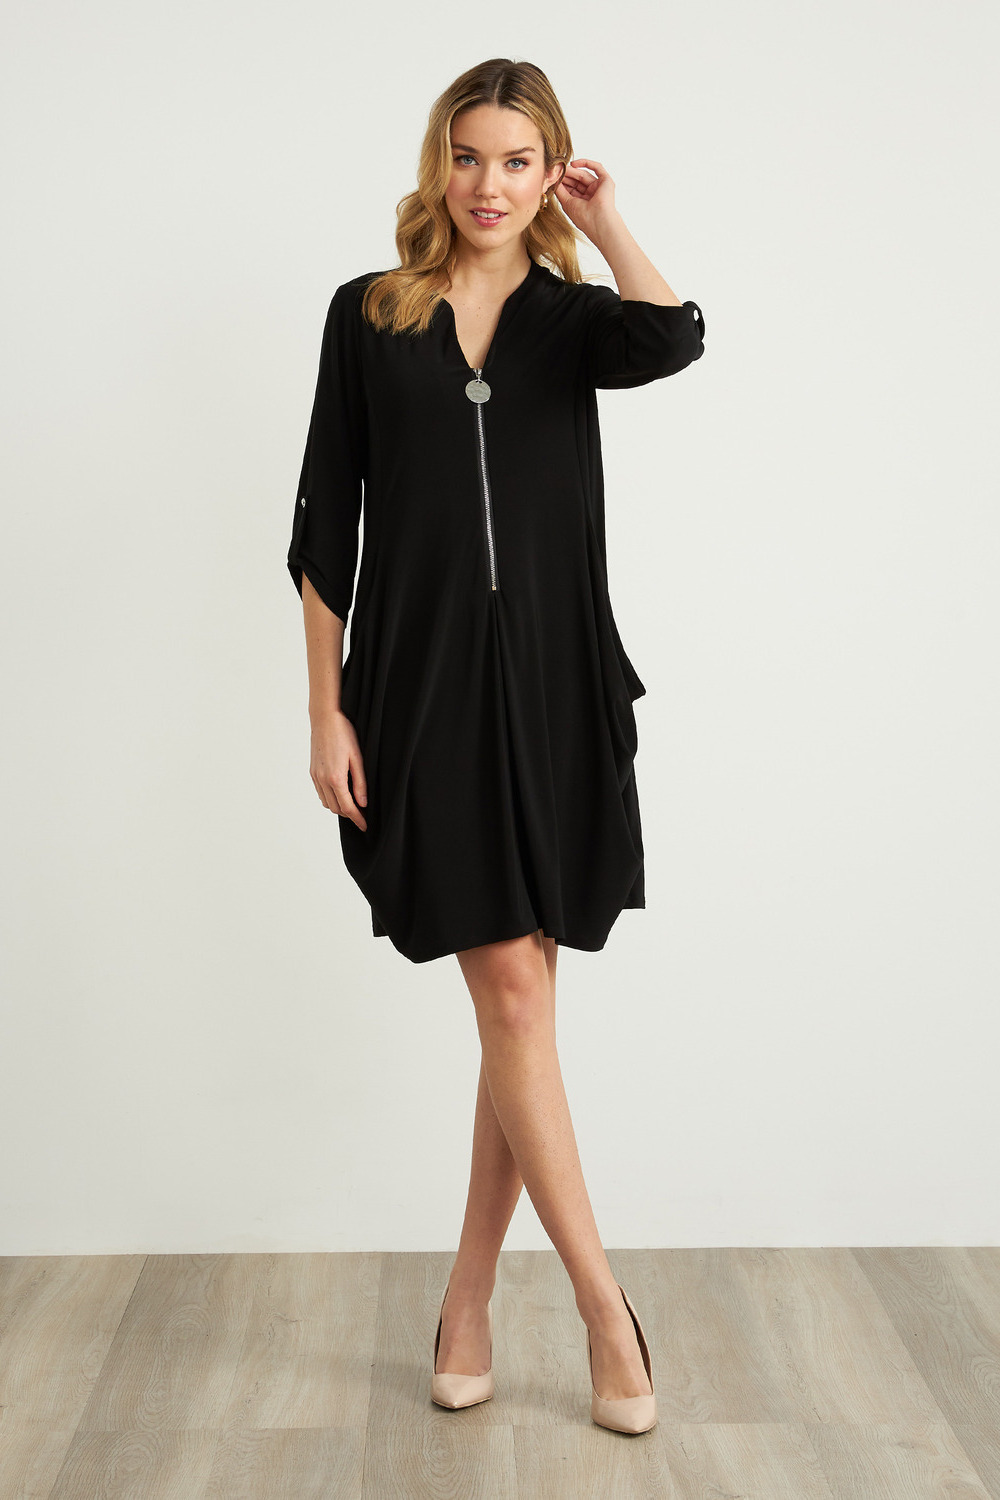 Joseph Ribkoff Zip Front Dress Style 211238. Black